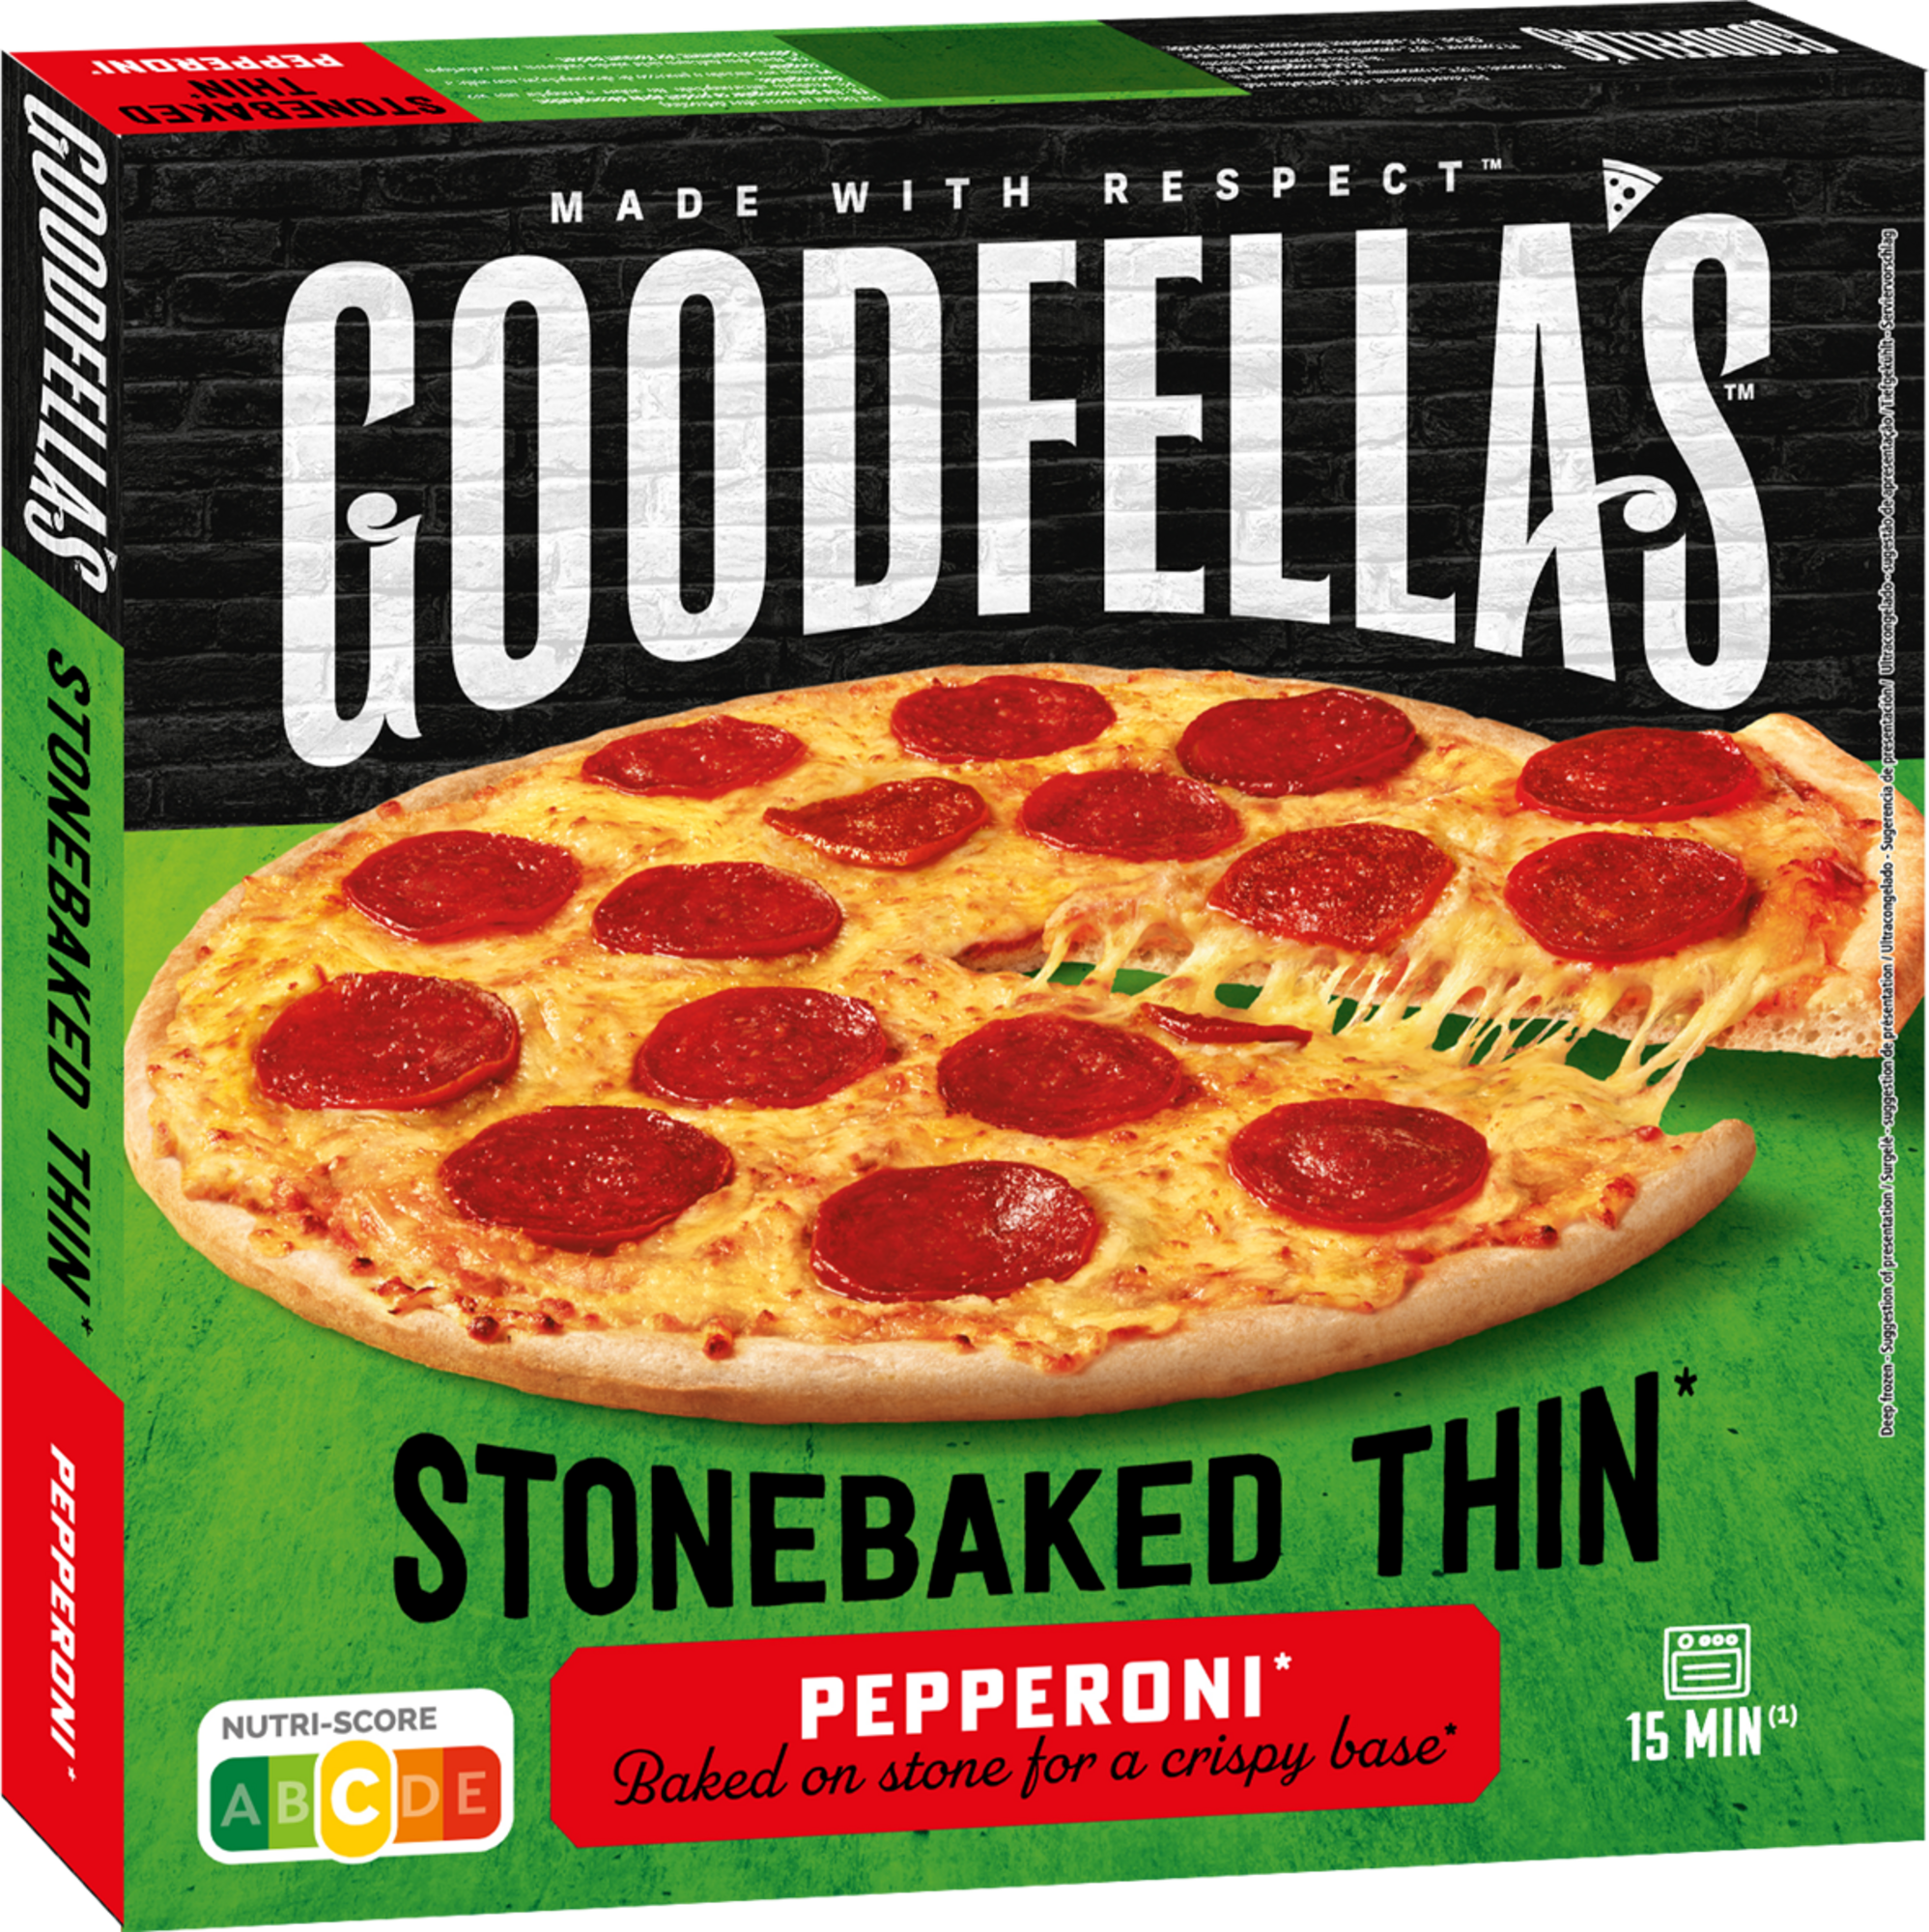 Pizza pepperoni surgelée
"GOODFELLAS"